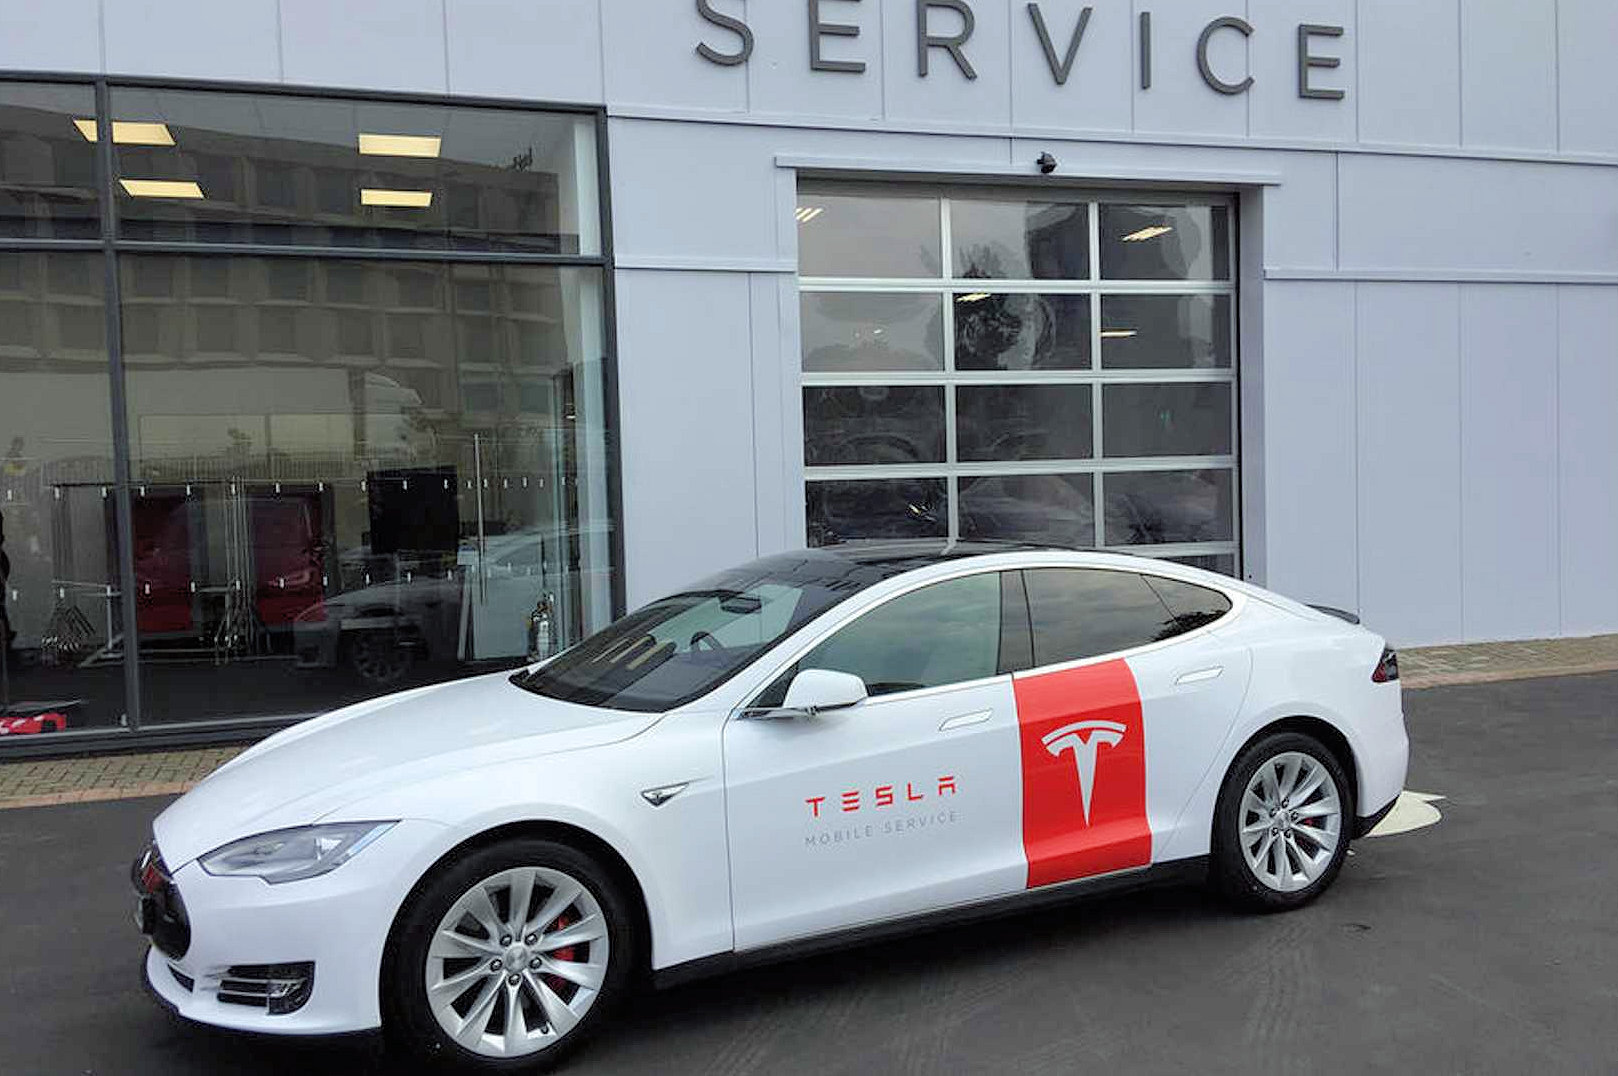 Exkluz vne Tesla  spust  na Slovensku mobiln  servis U 